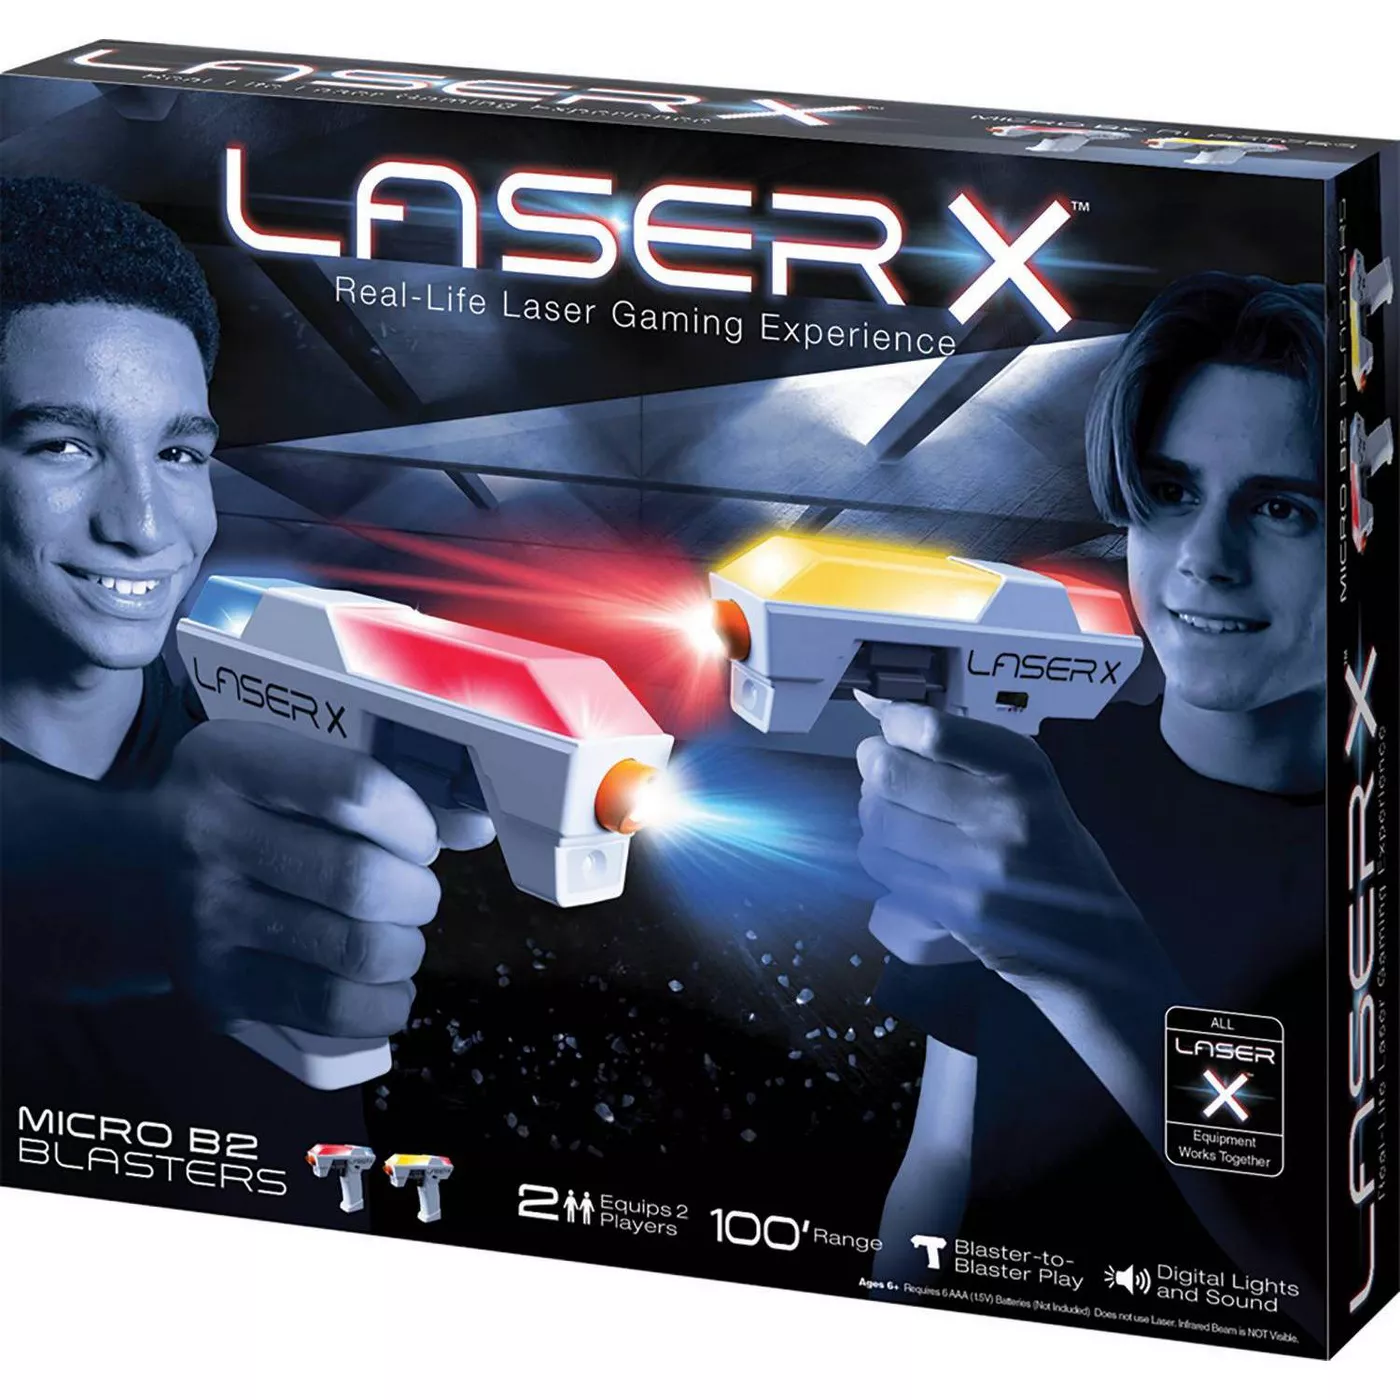 Laser X Two Player Micro B2 Blaster Laser Tag Gaming Set - image 1 of 4